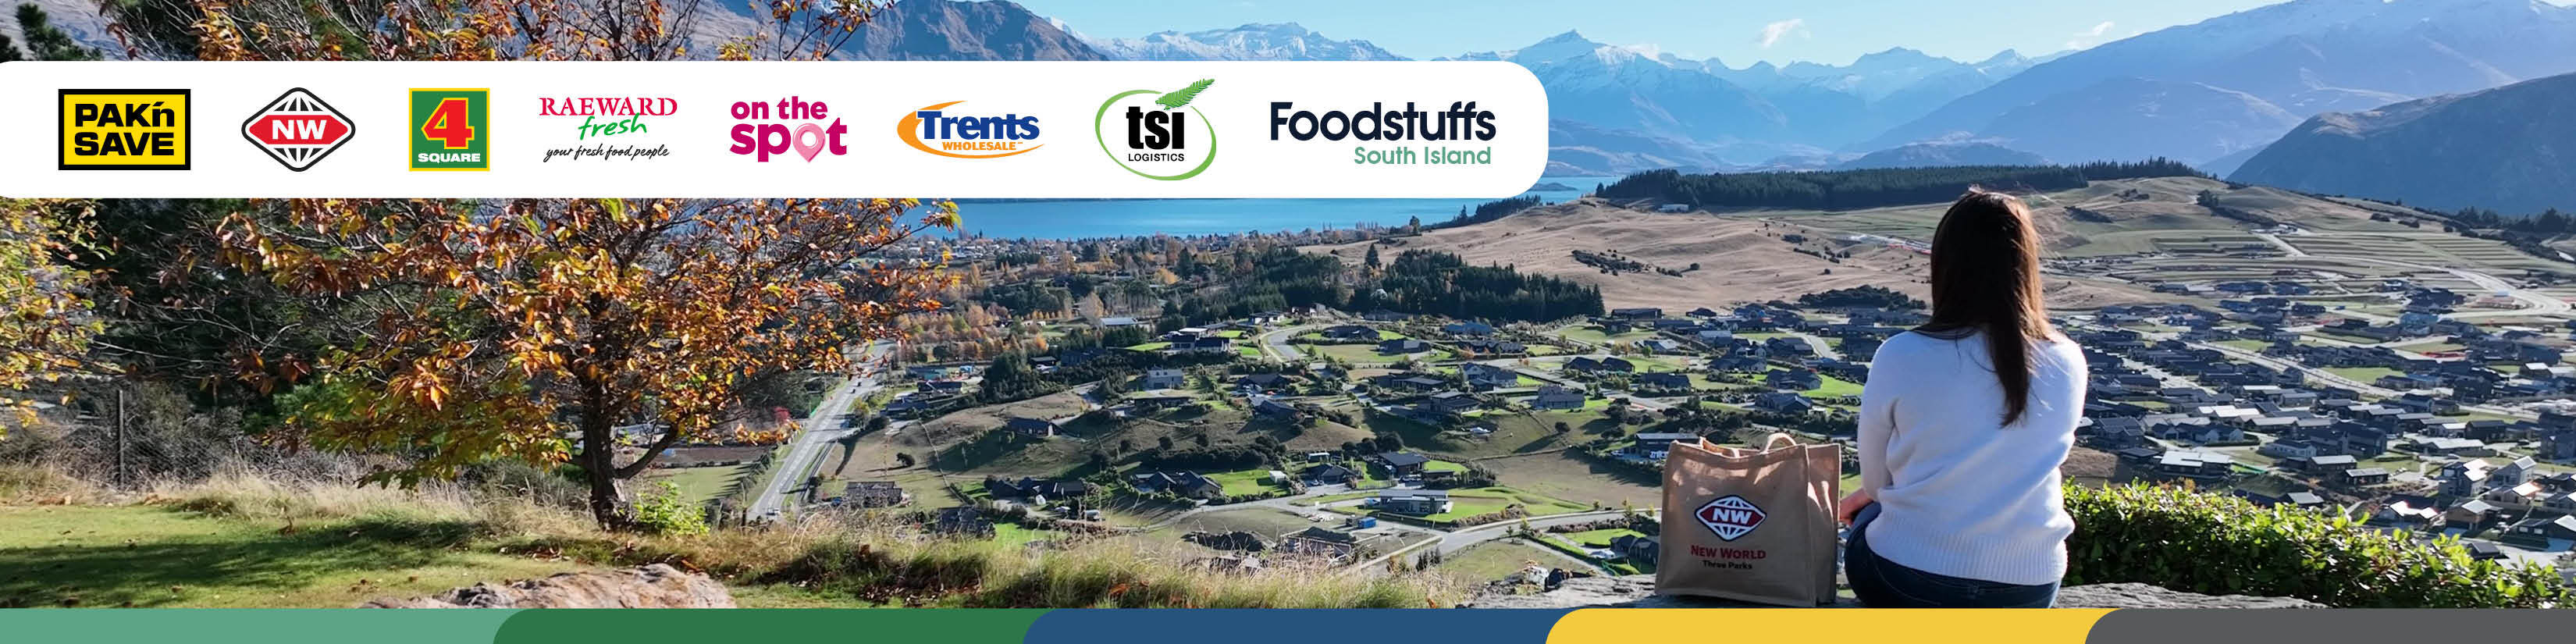 Foodstuffs South Island banner